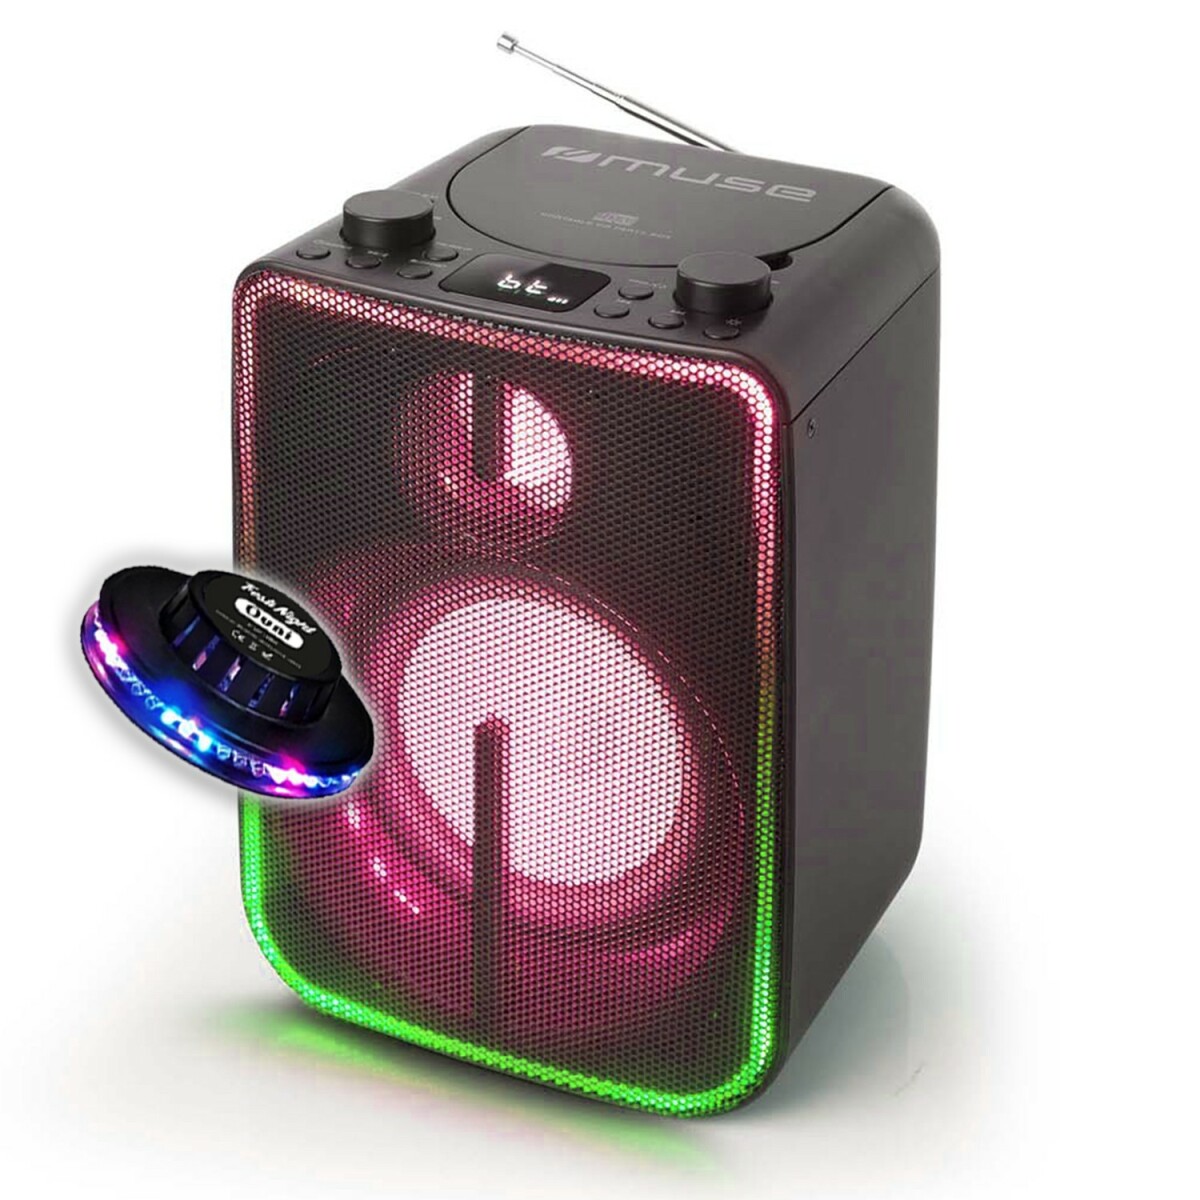 Enceinte sans fil Muse M-1810 DJ Stéréo 60W - Bluetooth 5.0, FM, CD, CD-R/RW, MP3, Effets LED - Batterie, AUX/USB, OVNI LED RVB